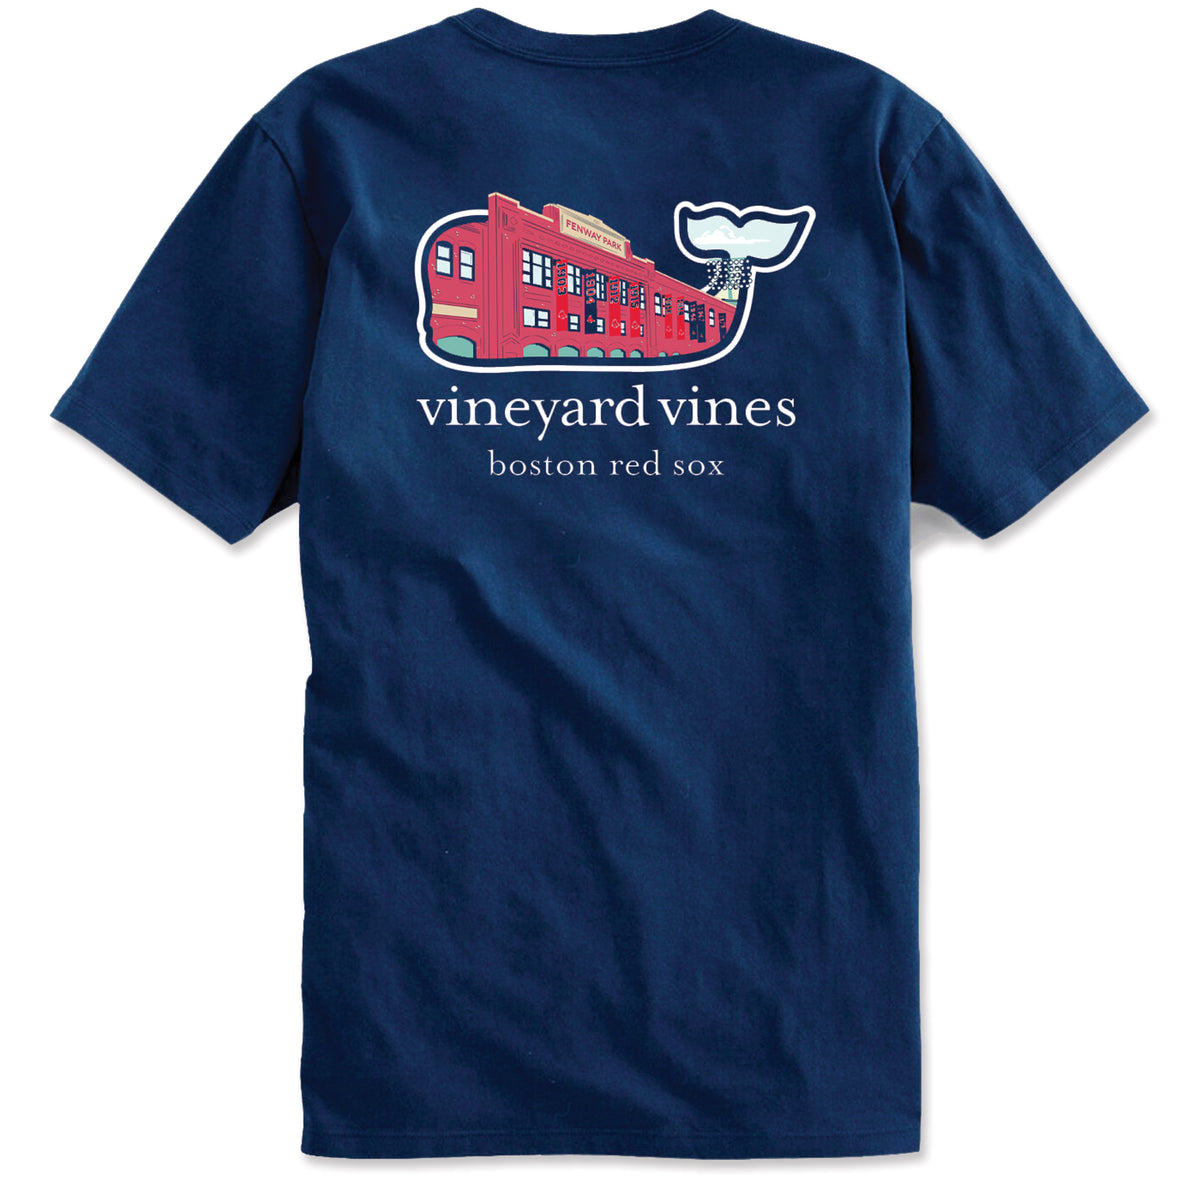 vineyard vines boston